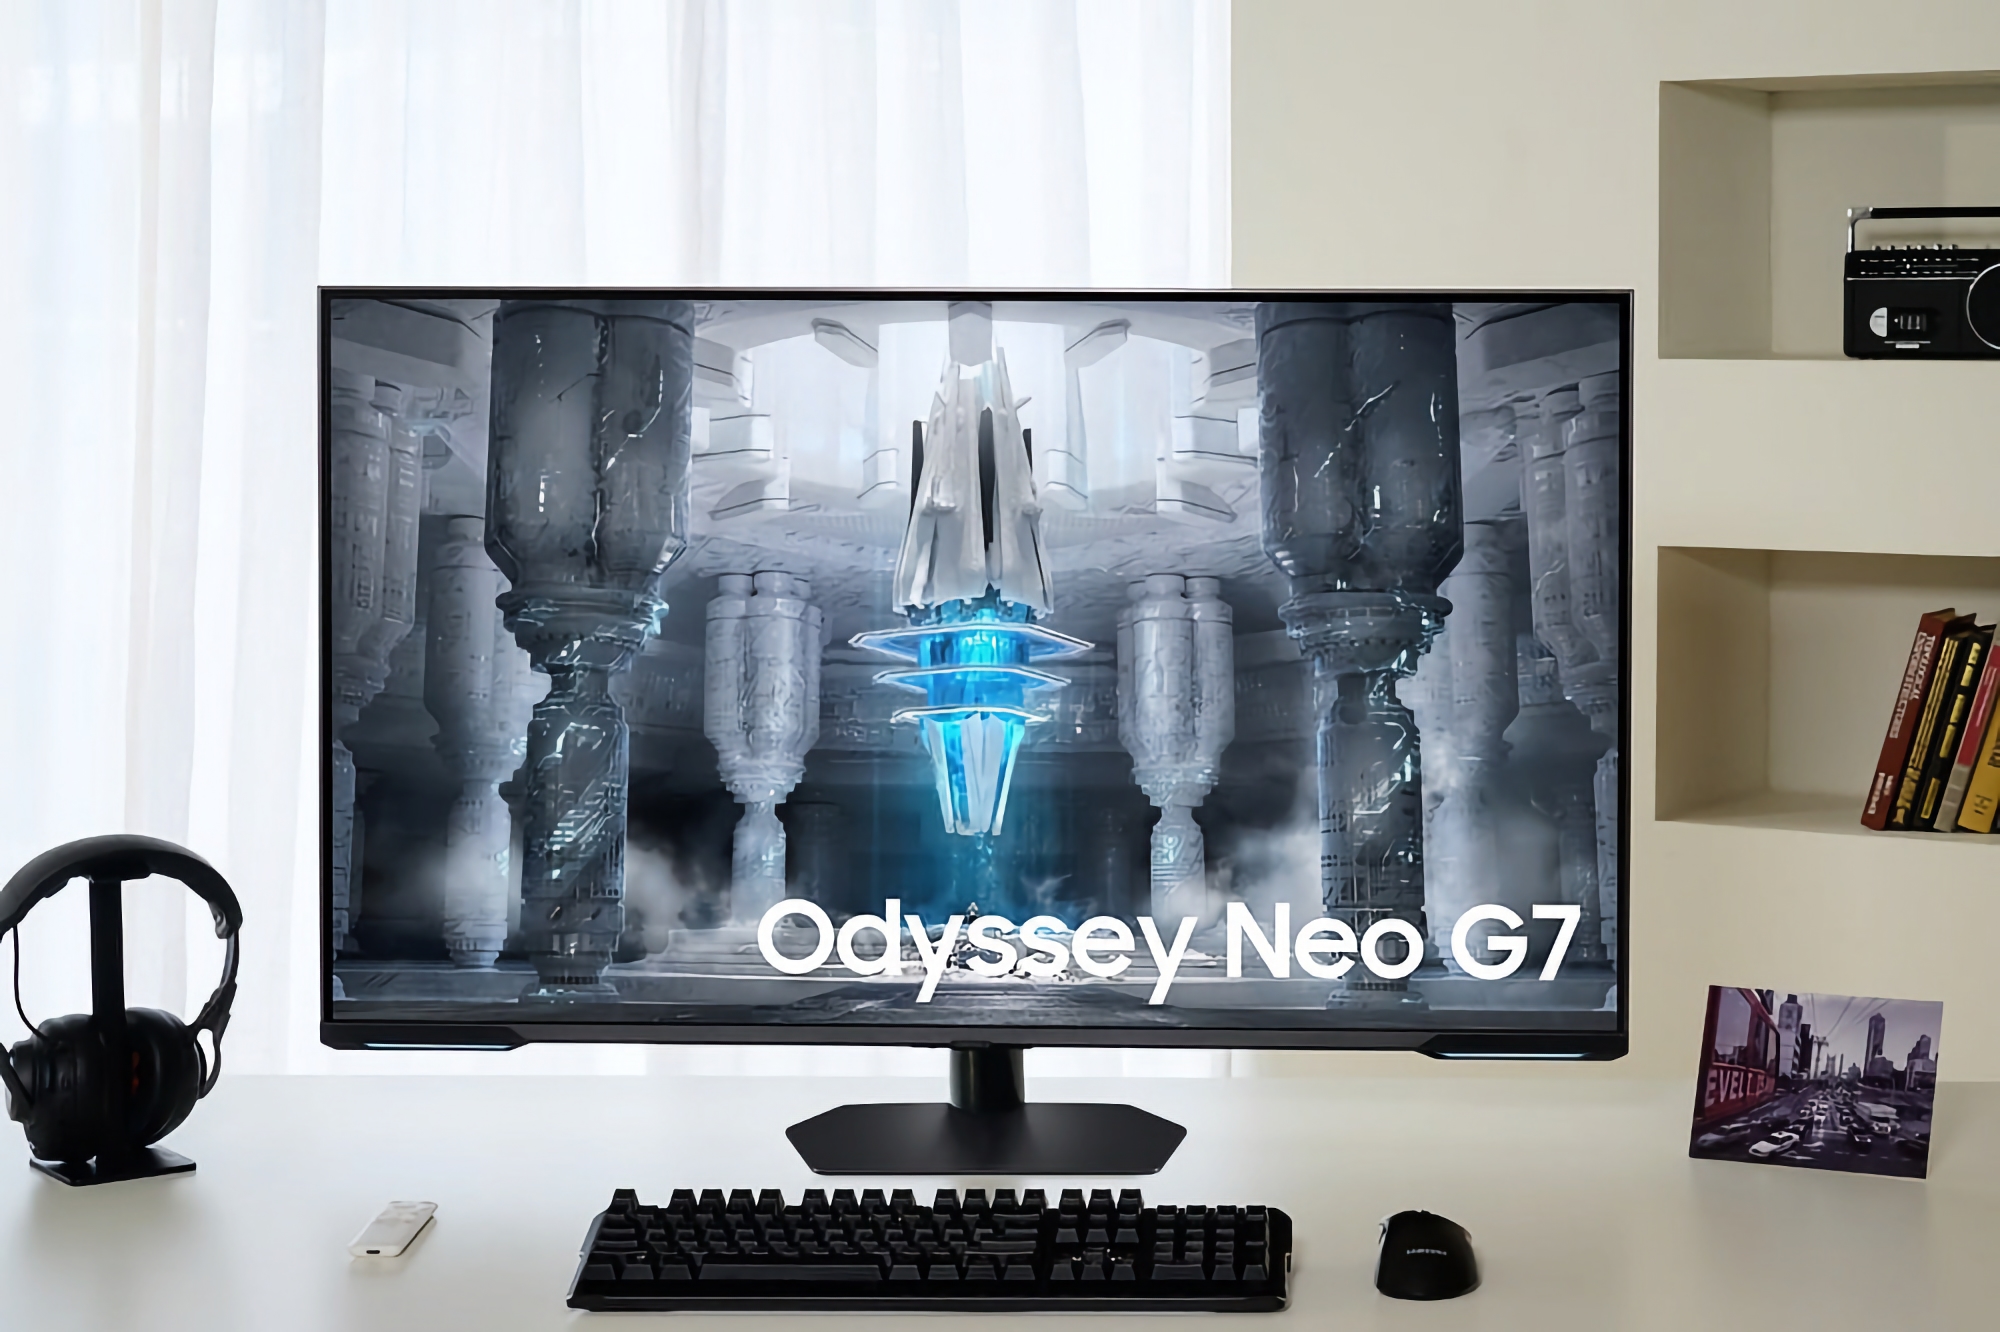 Samsung presentó el Odyssey Neo G7 (G70NC): Monitor gaming de 43 pulgadas con pantalla Mini LED 4K a 144 Hz por 982 dólares.